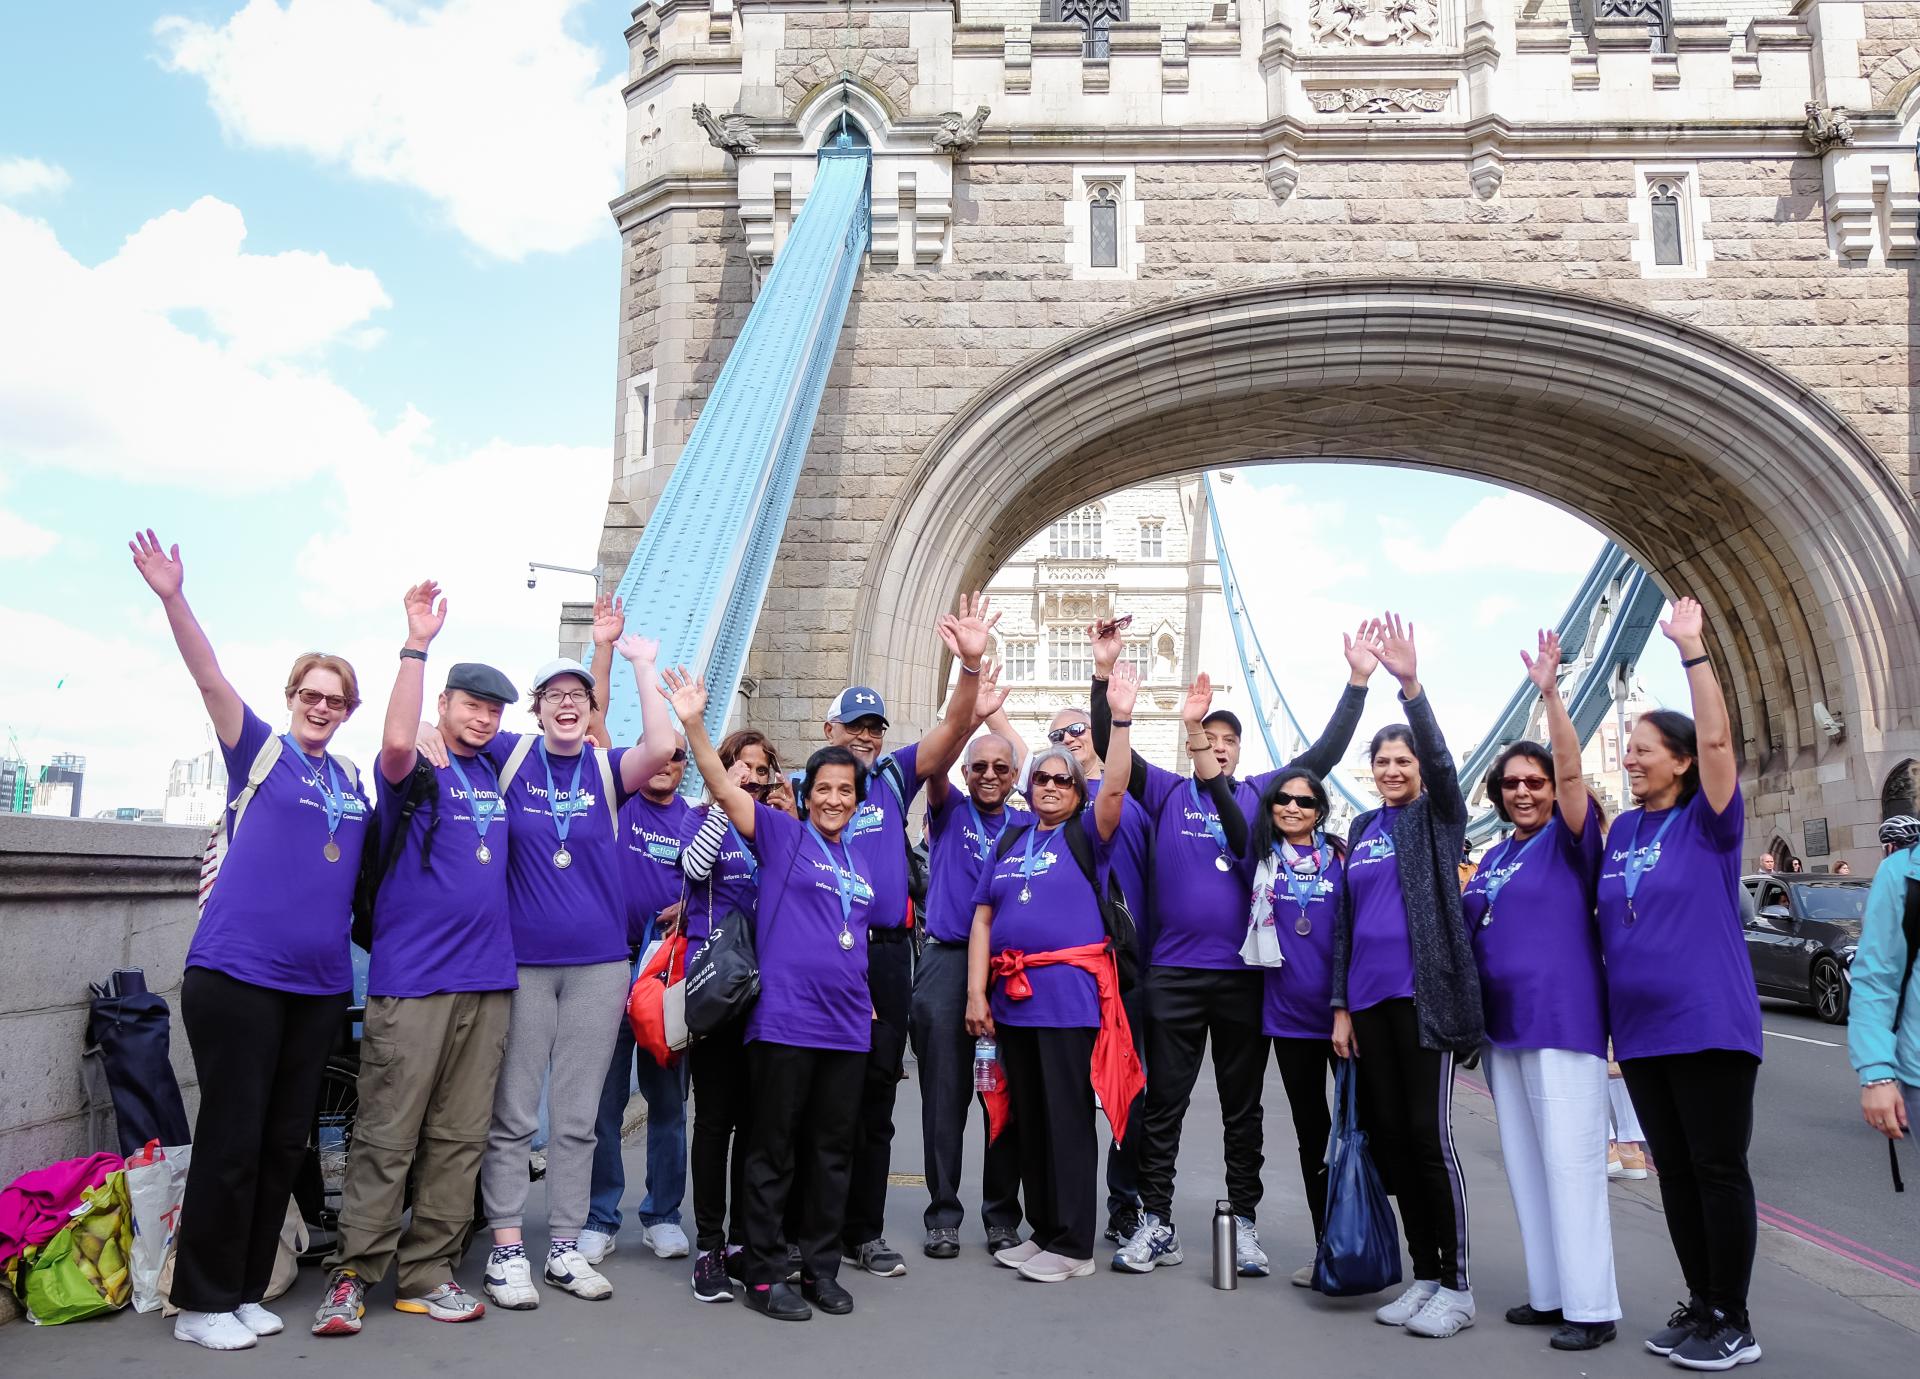 London Bridges Walk 2019 group cheering 